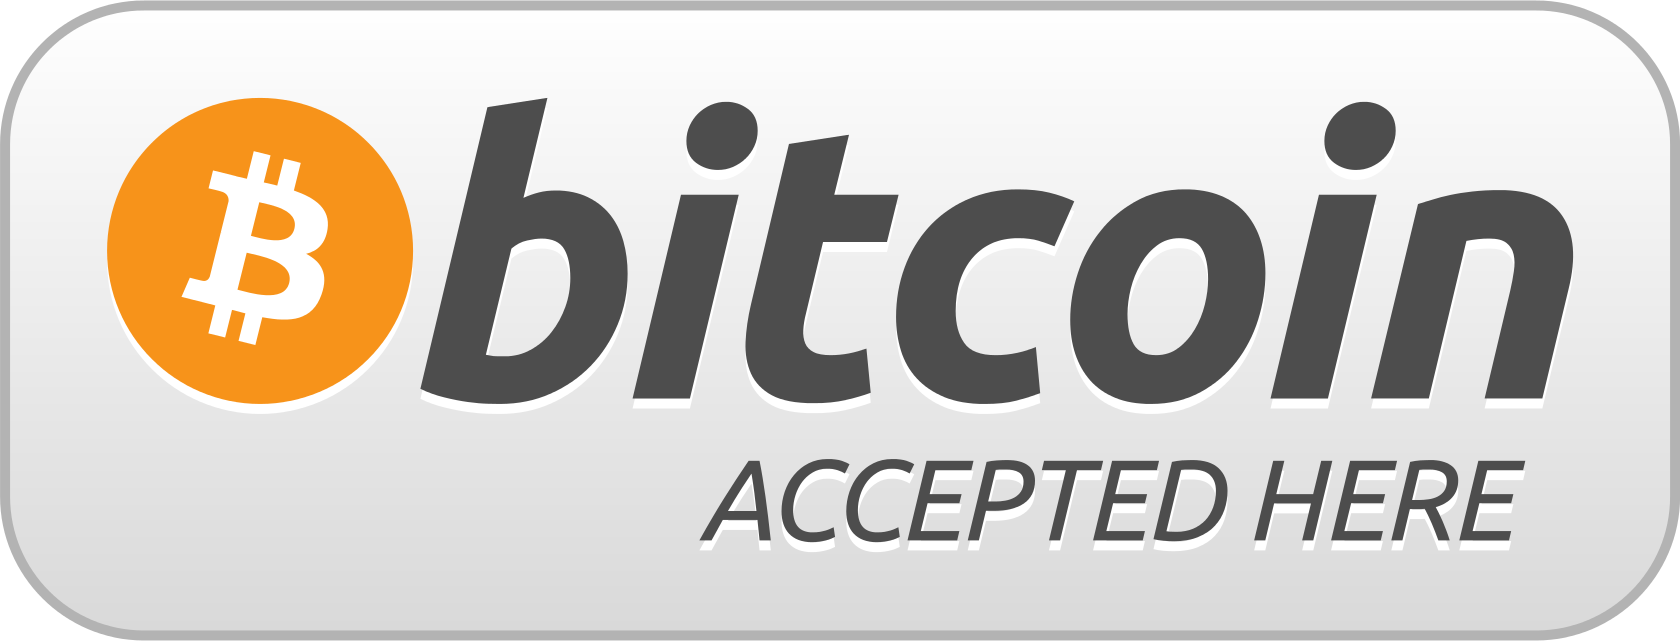 монеты Bitcoin